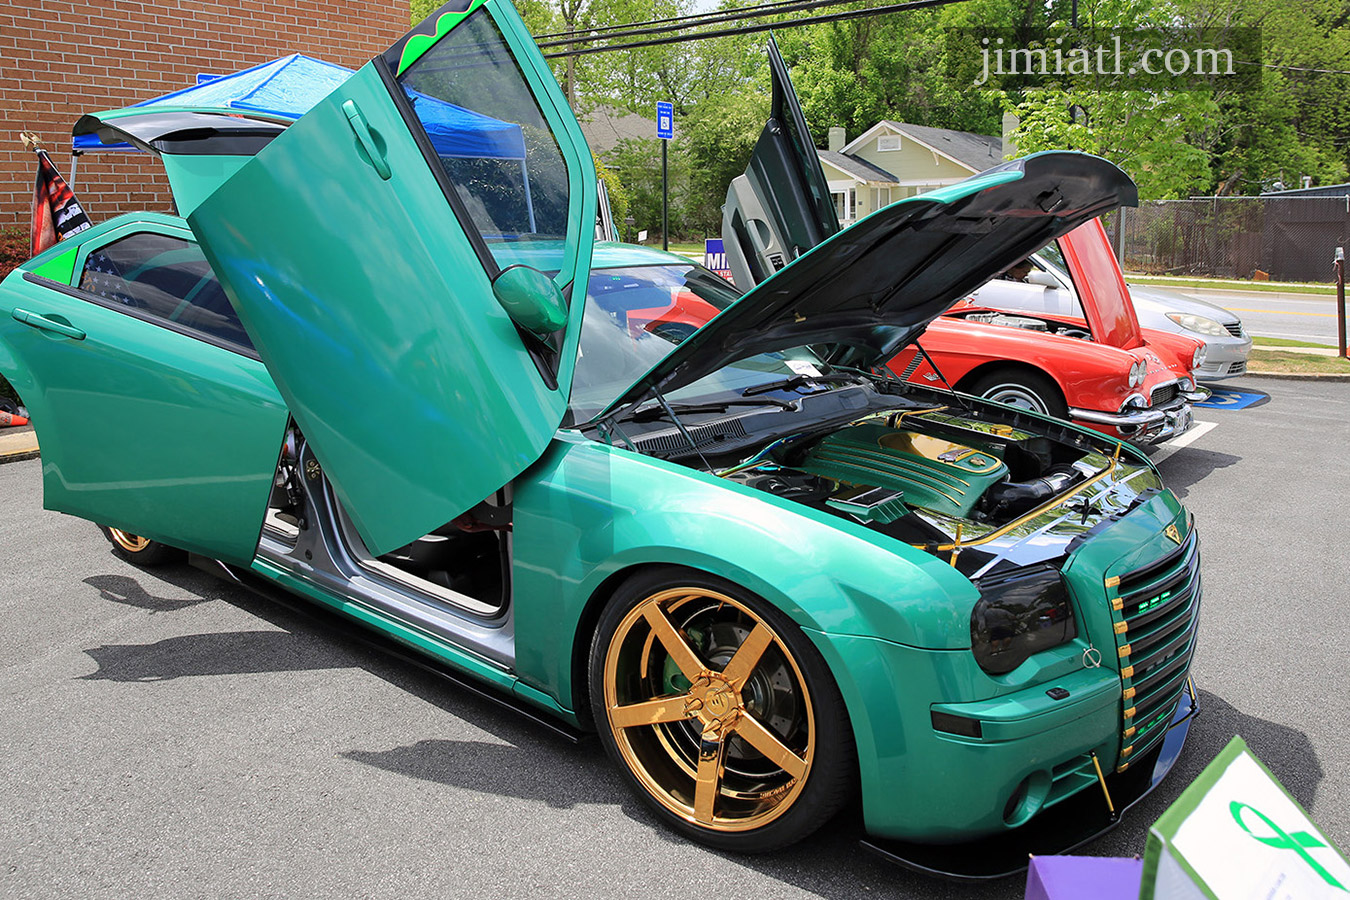 Dodge car with Lamborghini doors at downtown Lawrenceville car show.